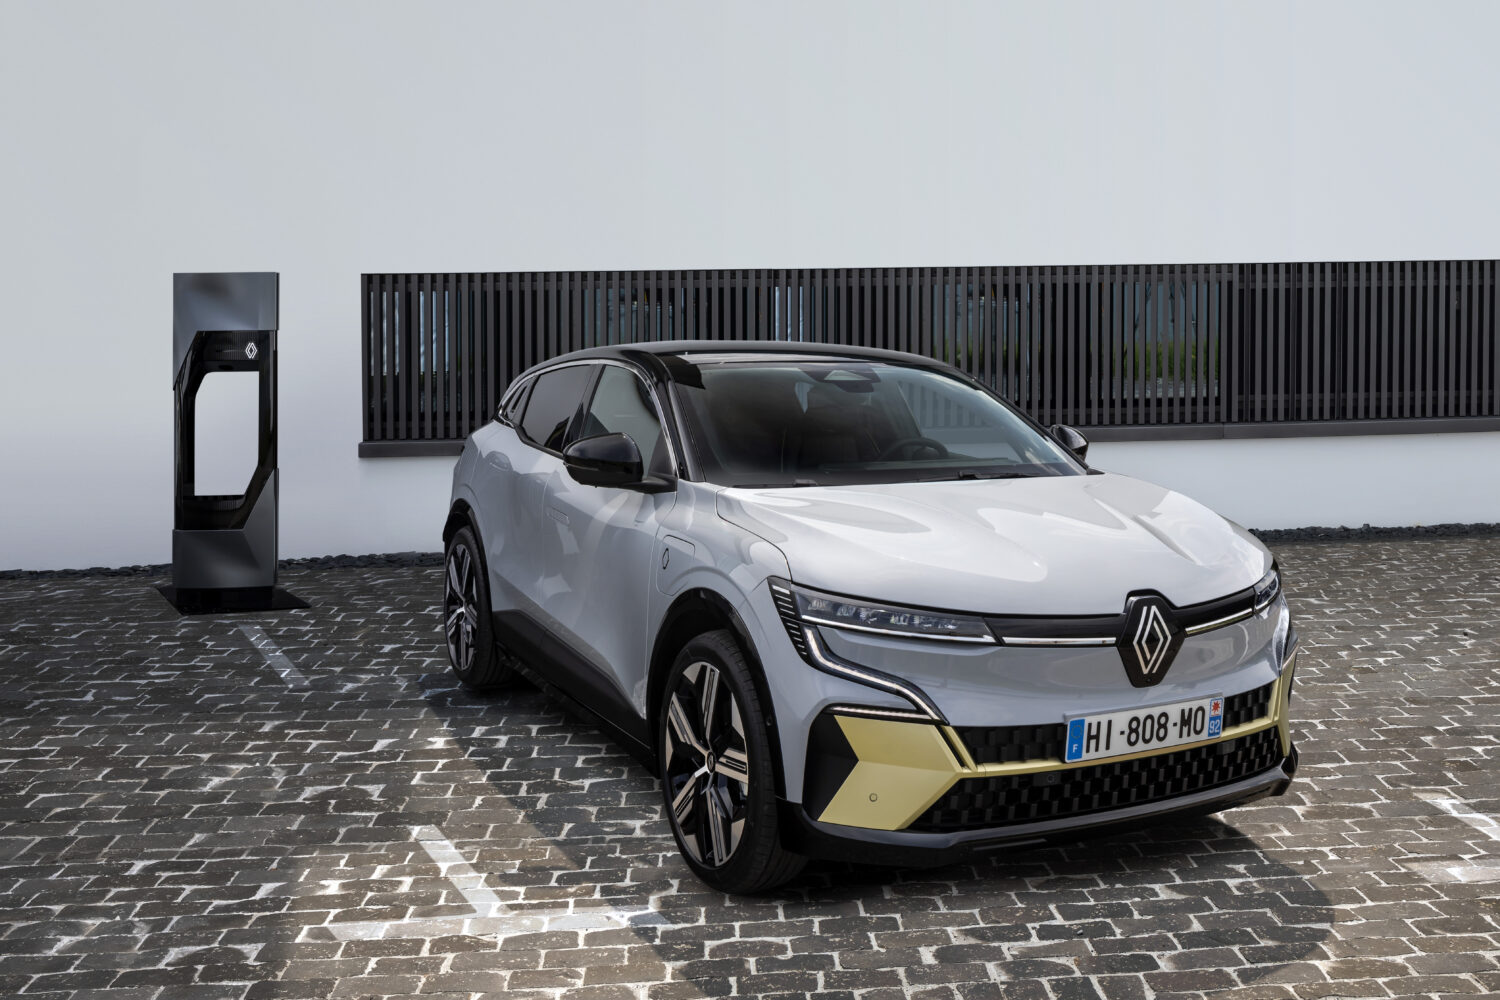 2021 - New Renault Mégane E-TECH Electric - Urban (1).jpg